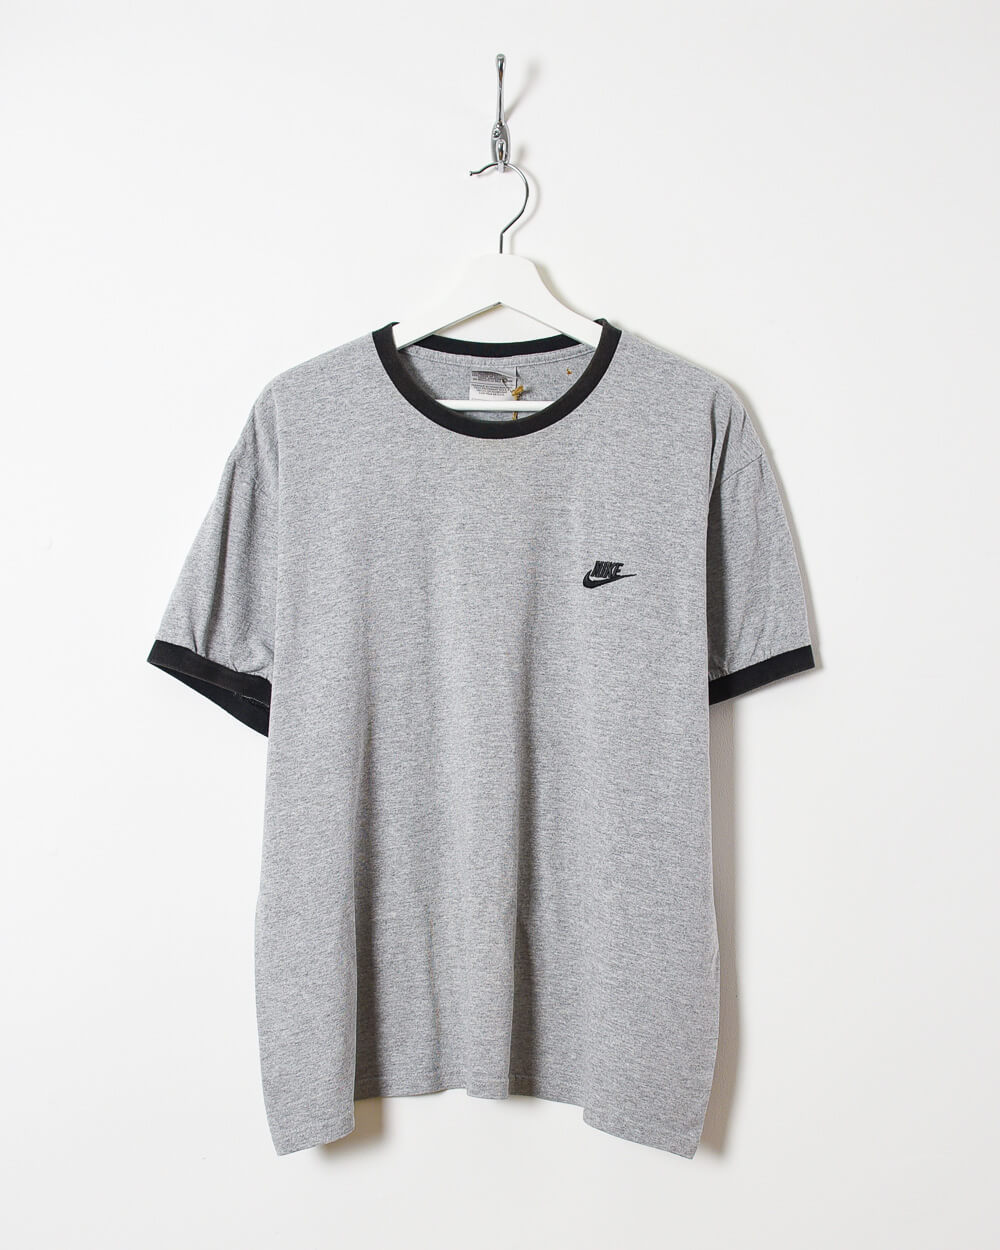 Nike T-Shirt - Medium - Domno Vintage 90s, 80s, 00s Retro and Vintage Clothing 